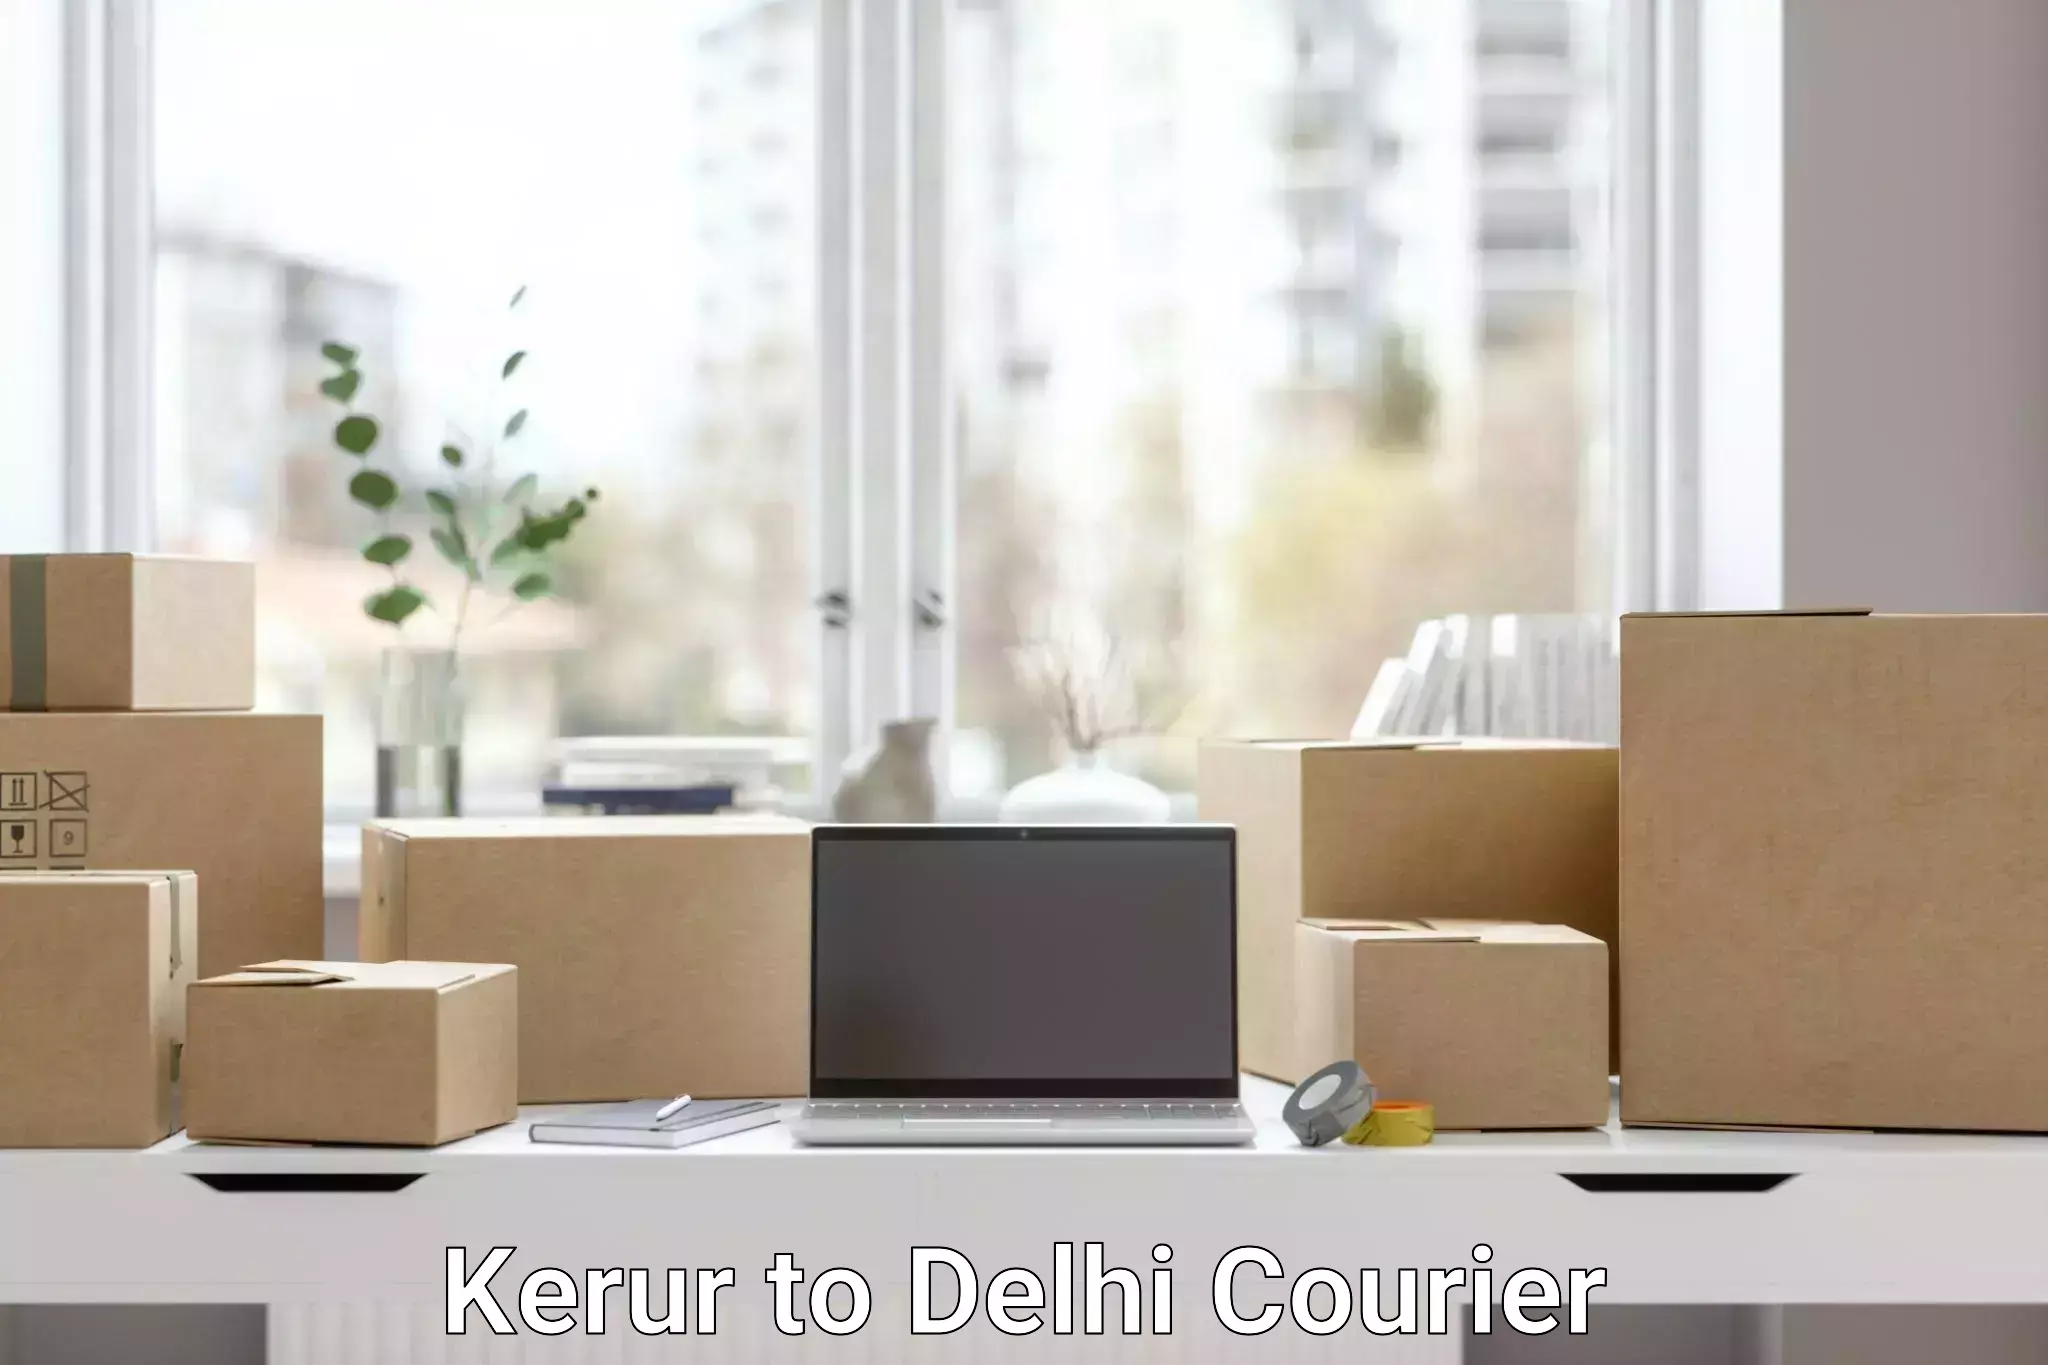 Courier service comparison in Kerur to University of Delhi